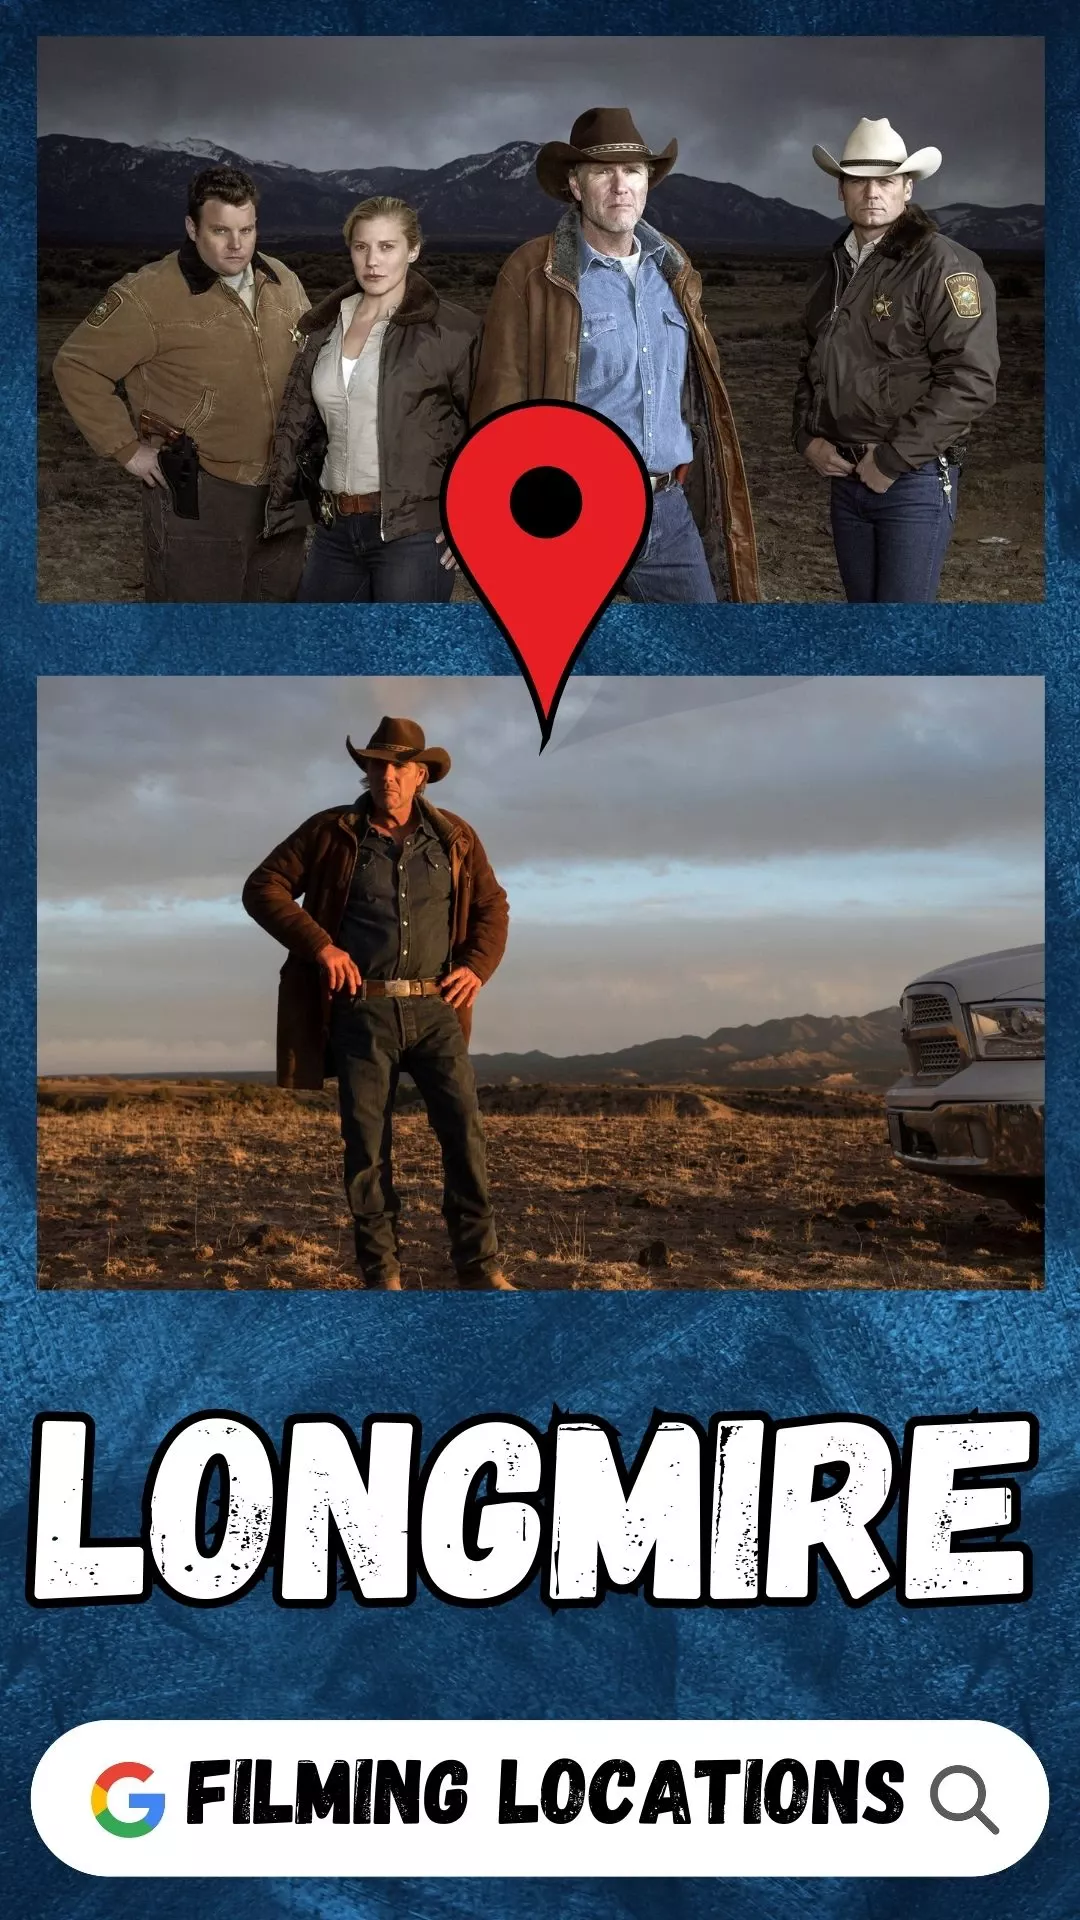 Longmire Filming Locations